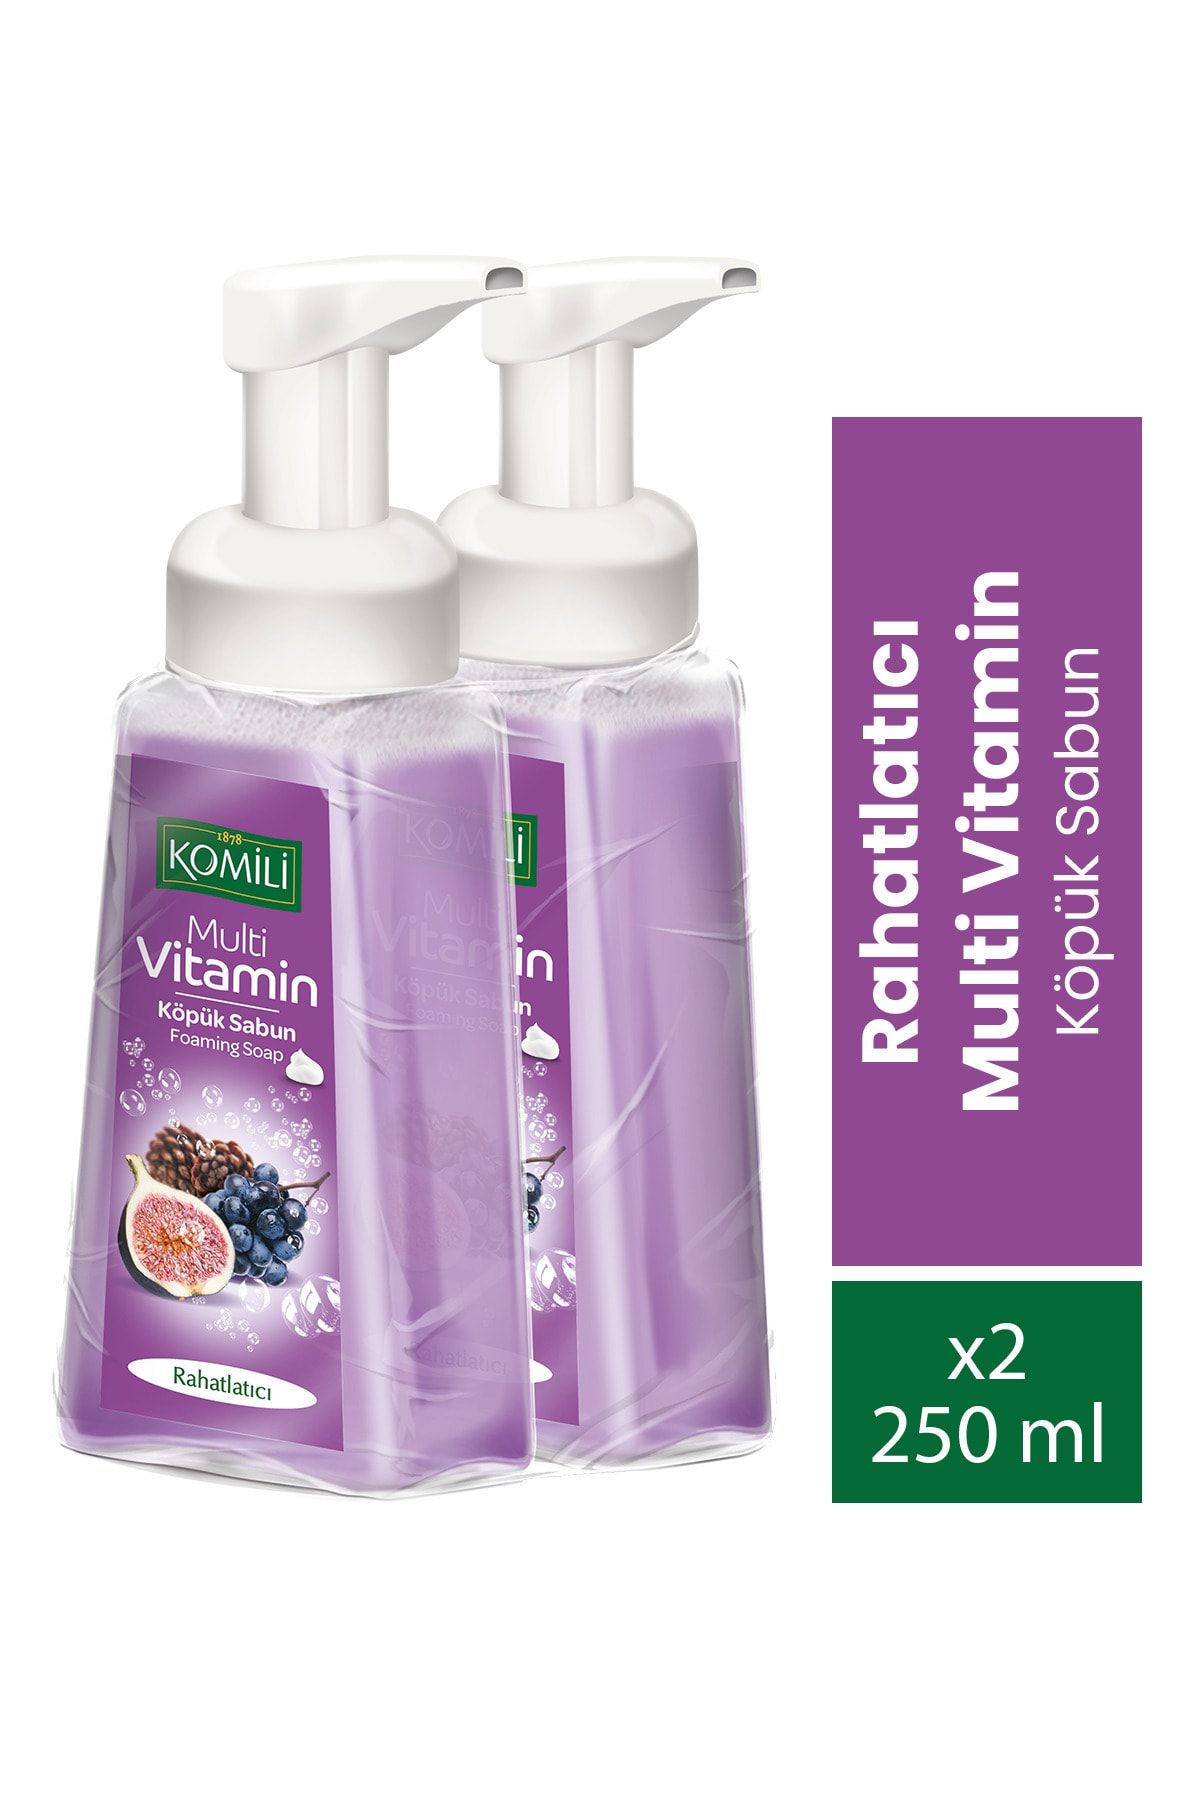 Komili Rahatlatıcı Köpük Sabun Multi Vitamin 250 ml 250 ml